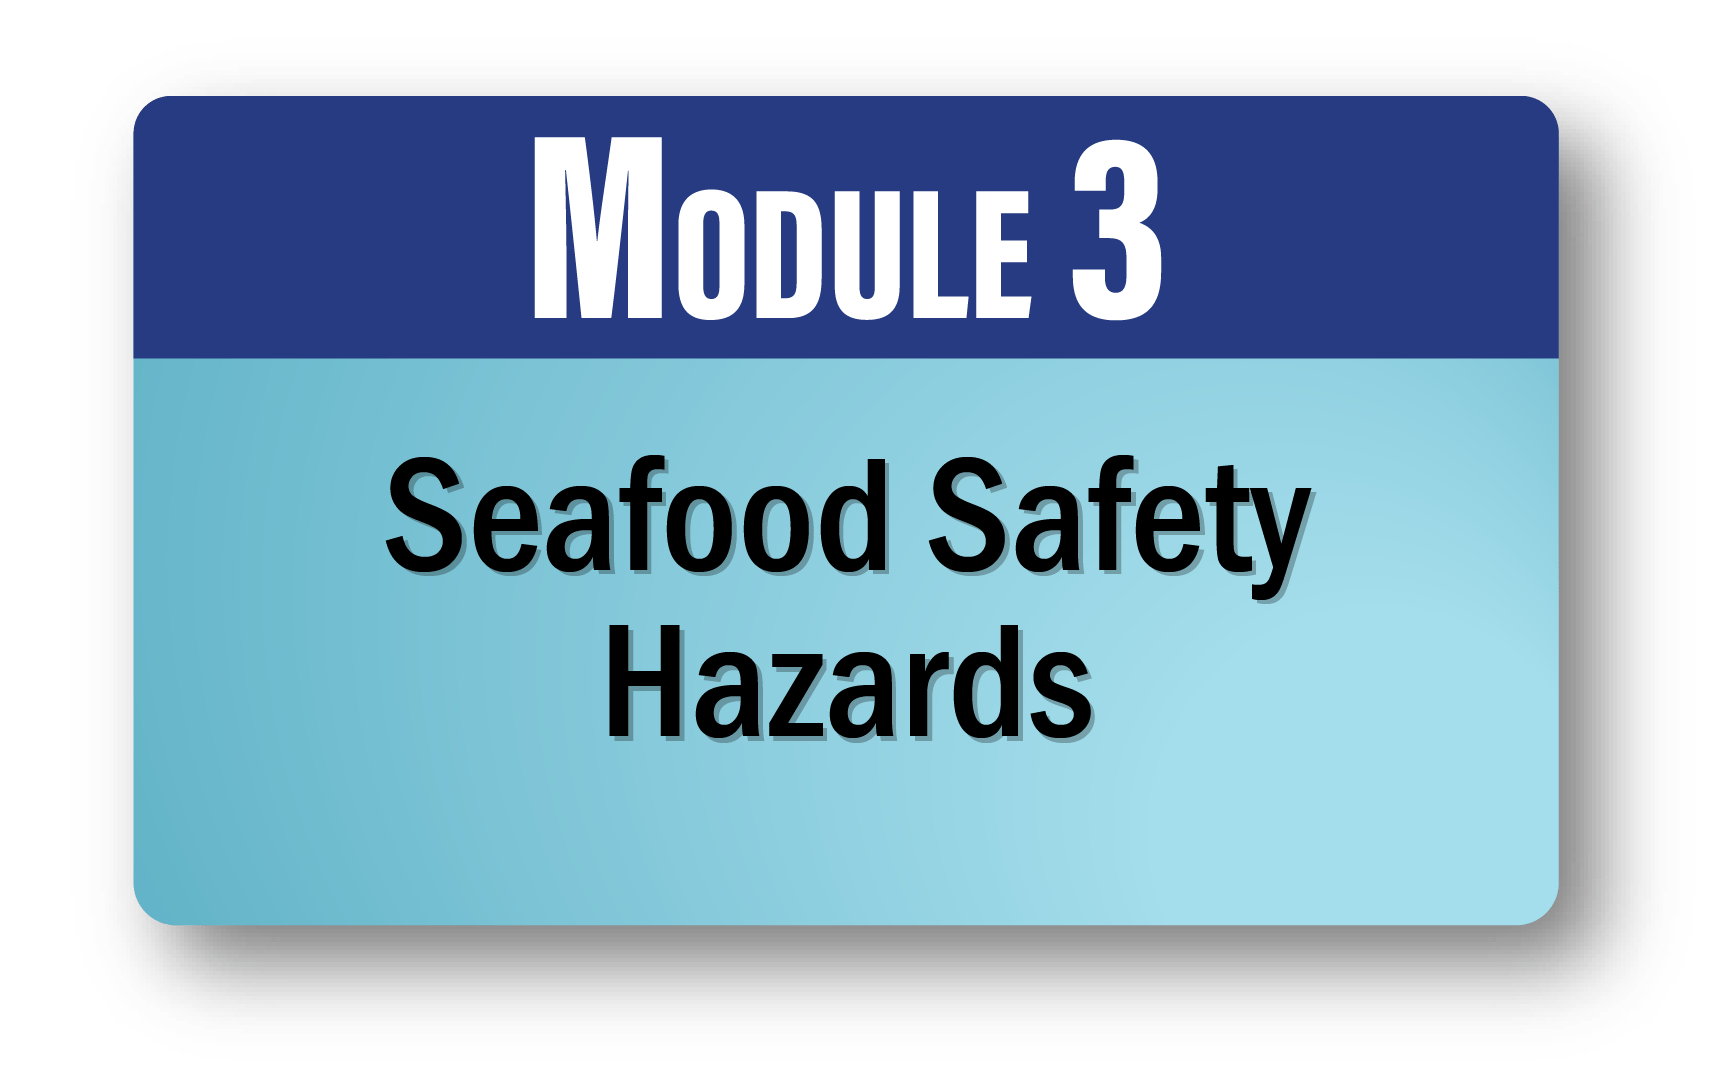 Module 3: Seafood Safety Hazards